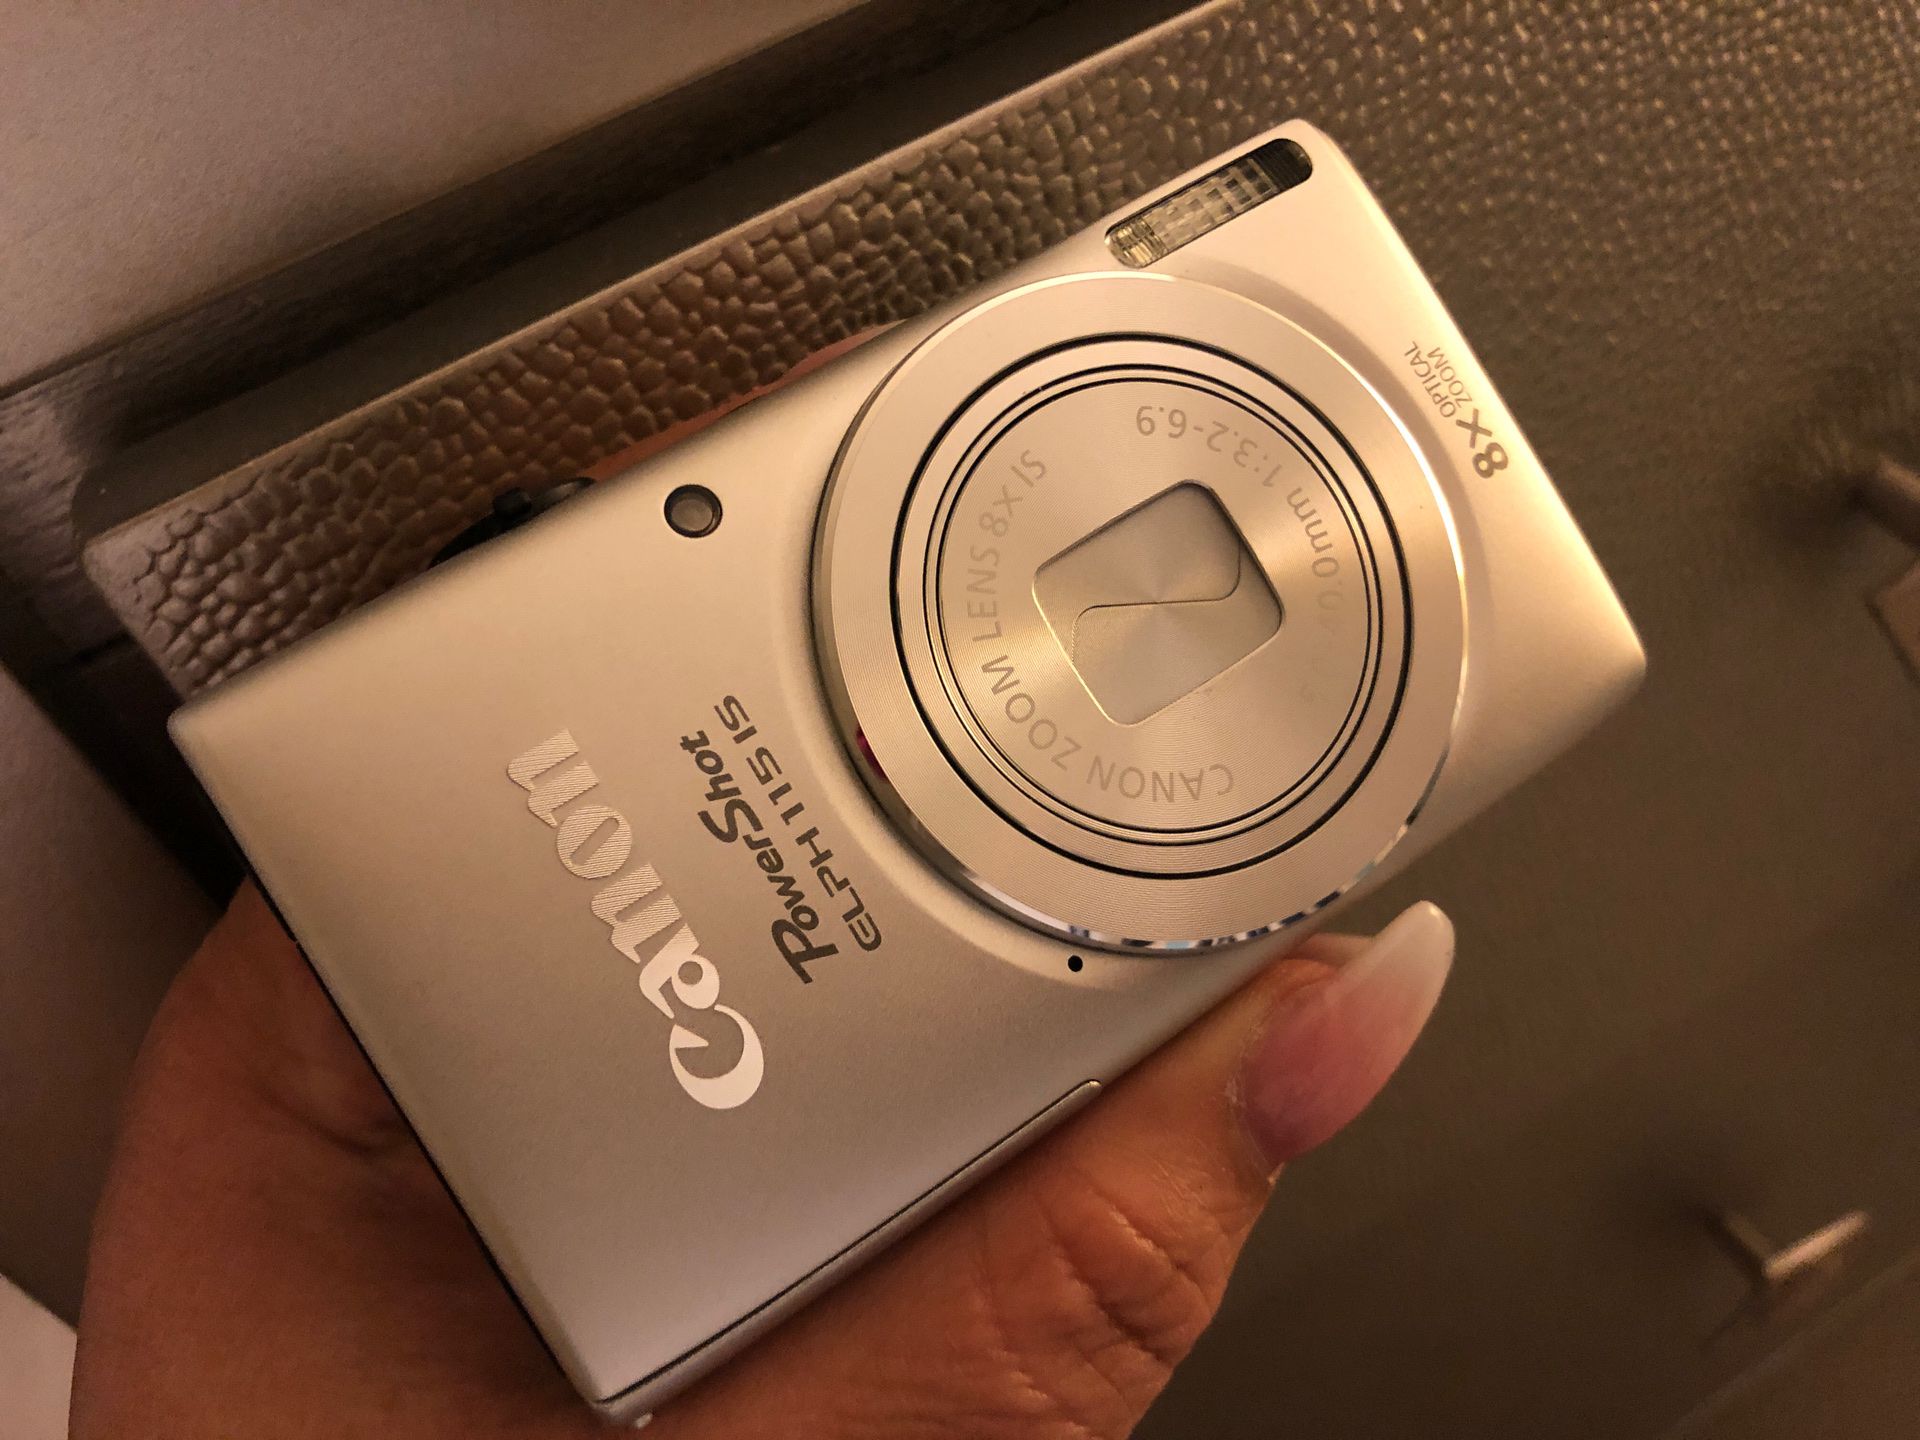 Power shot Canon digital camera